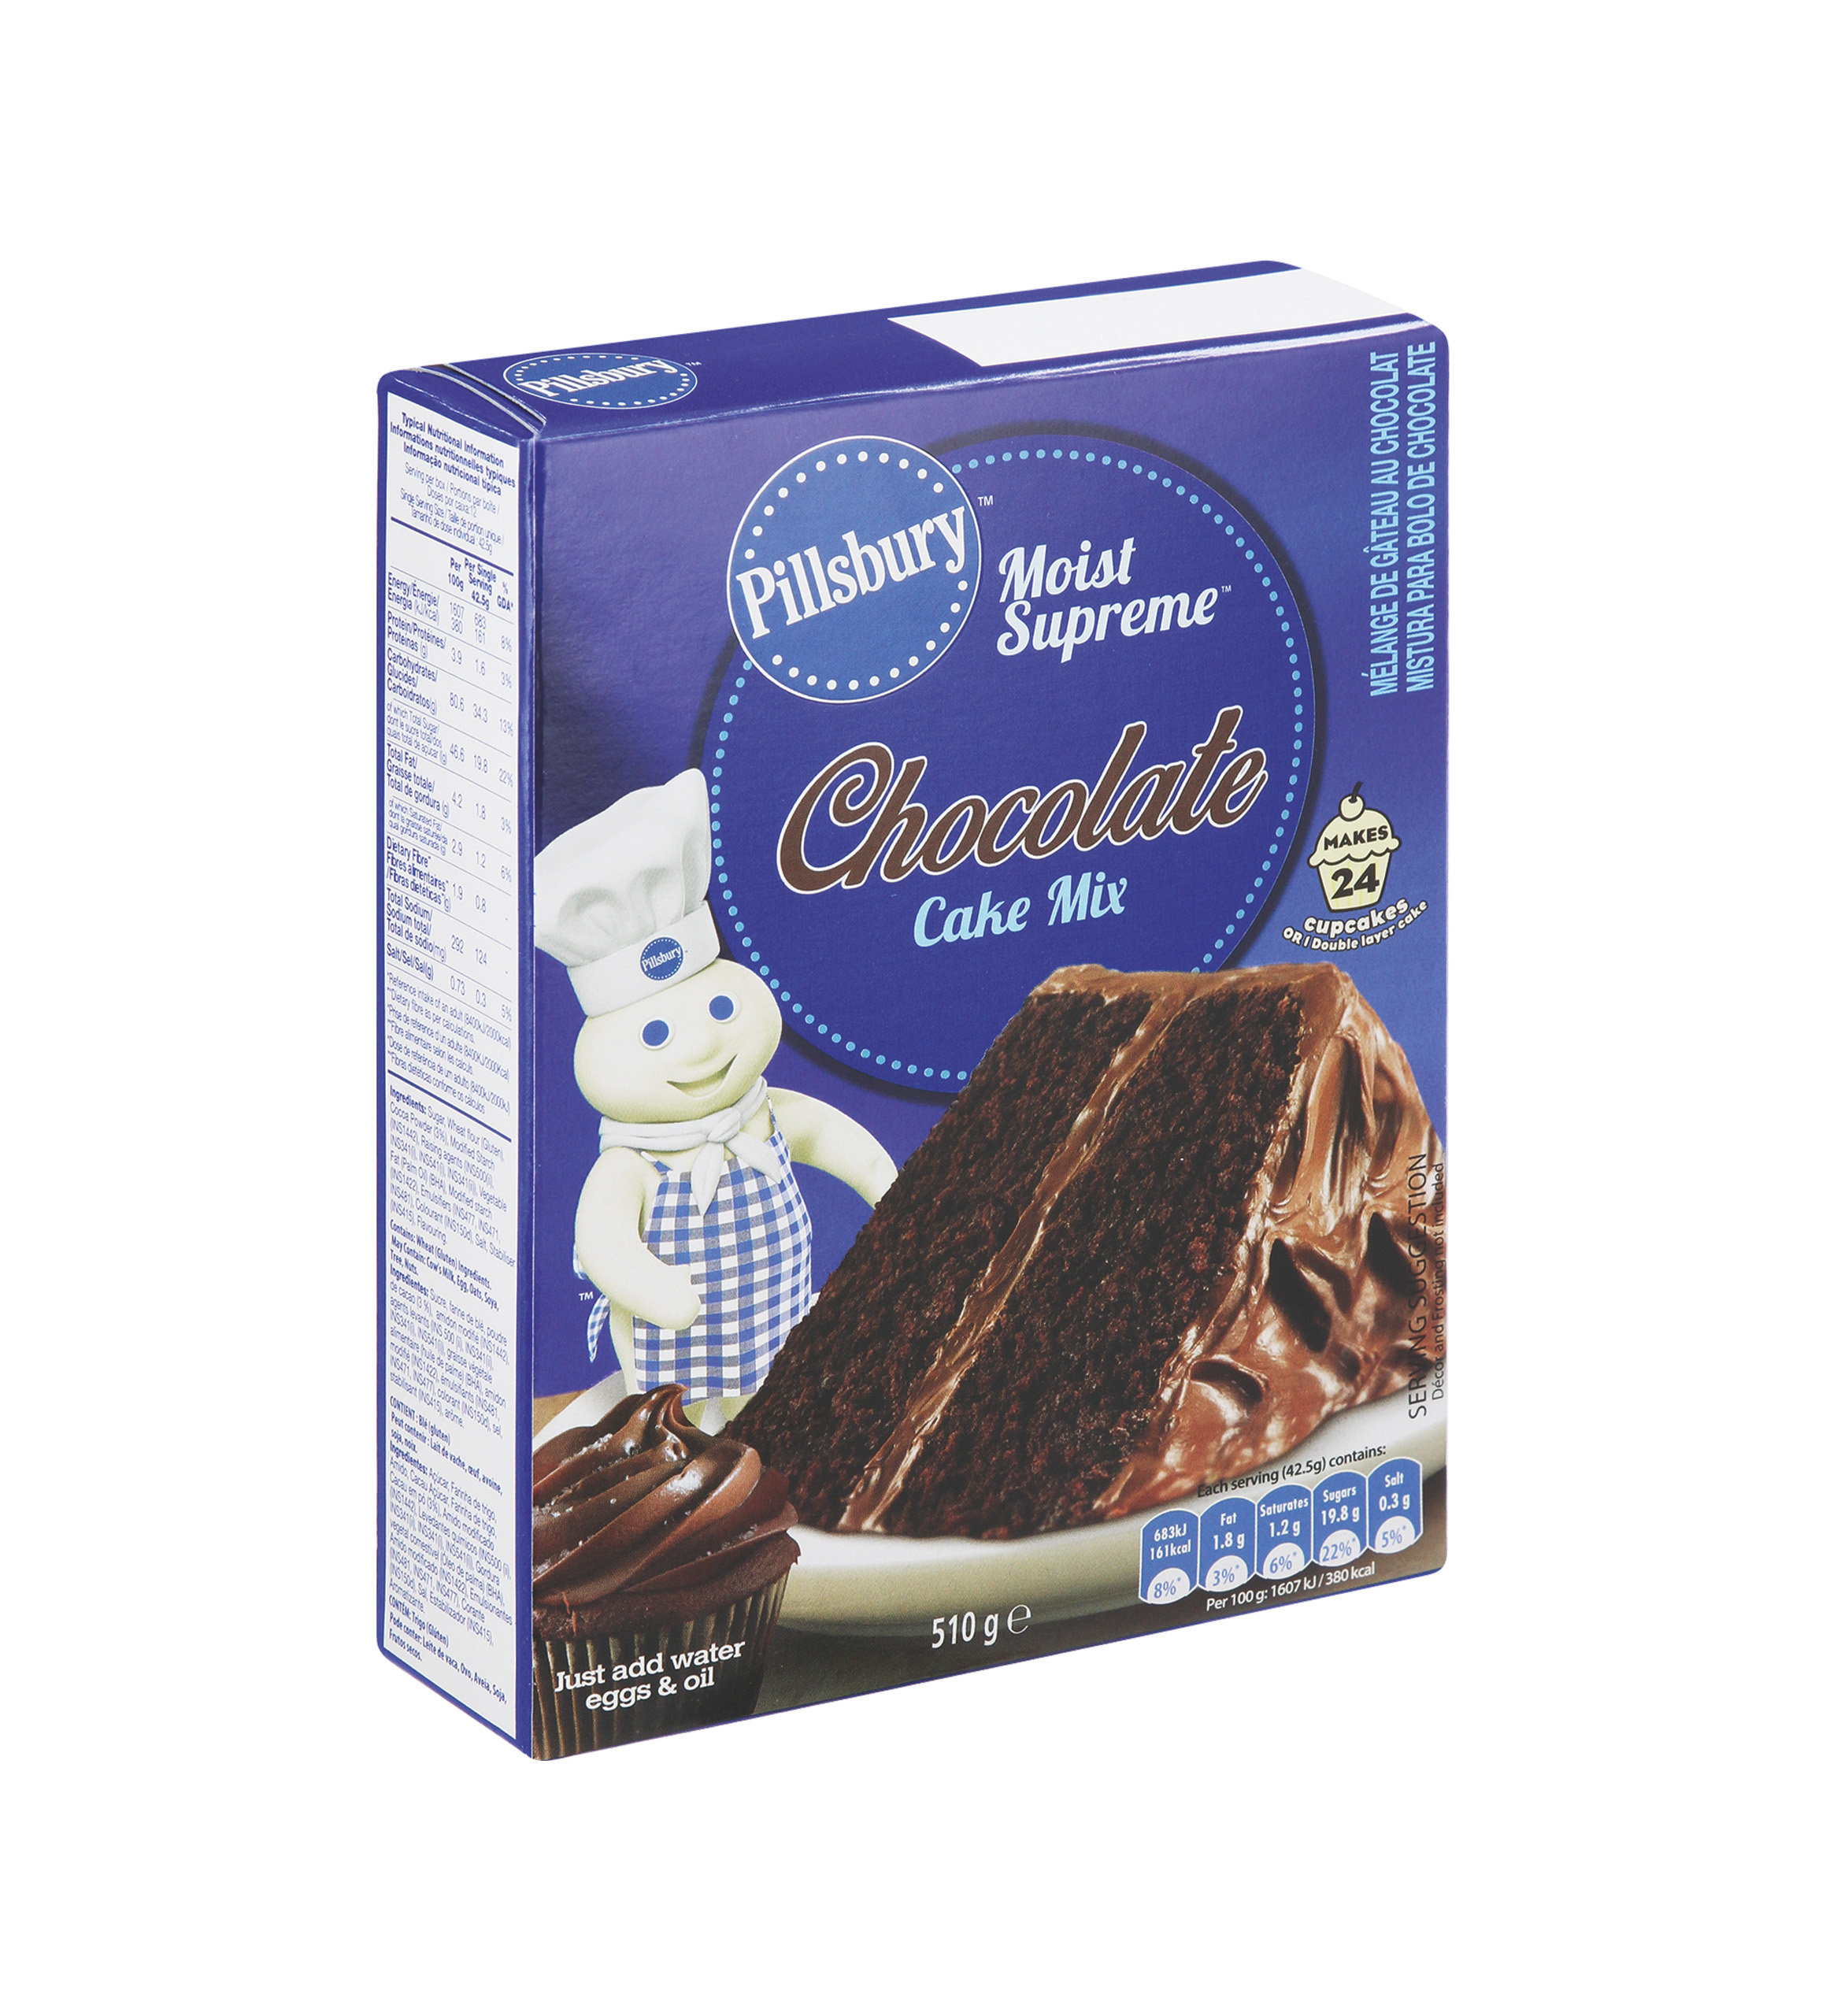 Pillsbury Egg-Free Chocolate Cake Mix - General Mills Foodservice